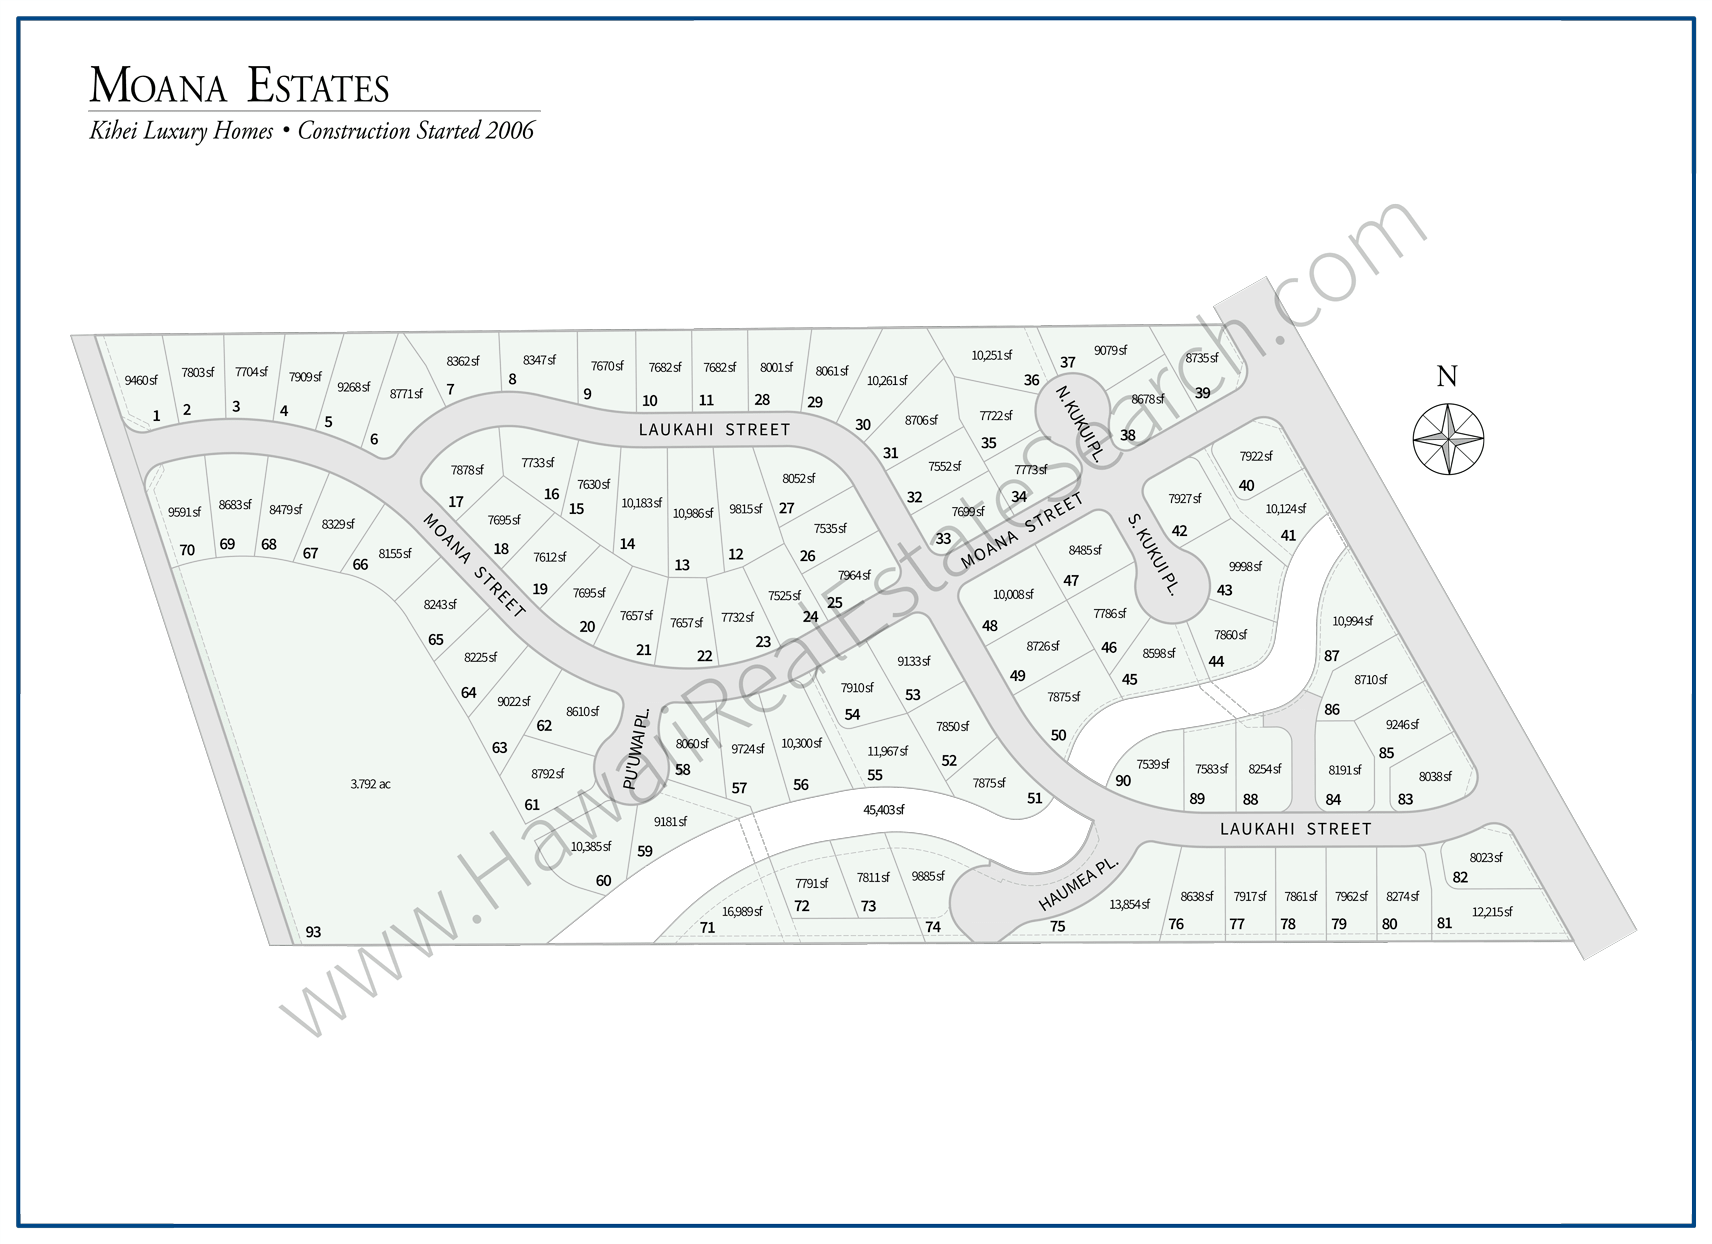 Moana Estates Plat Map with detail